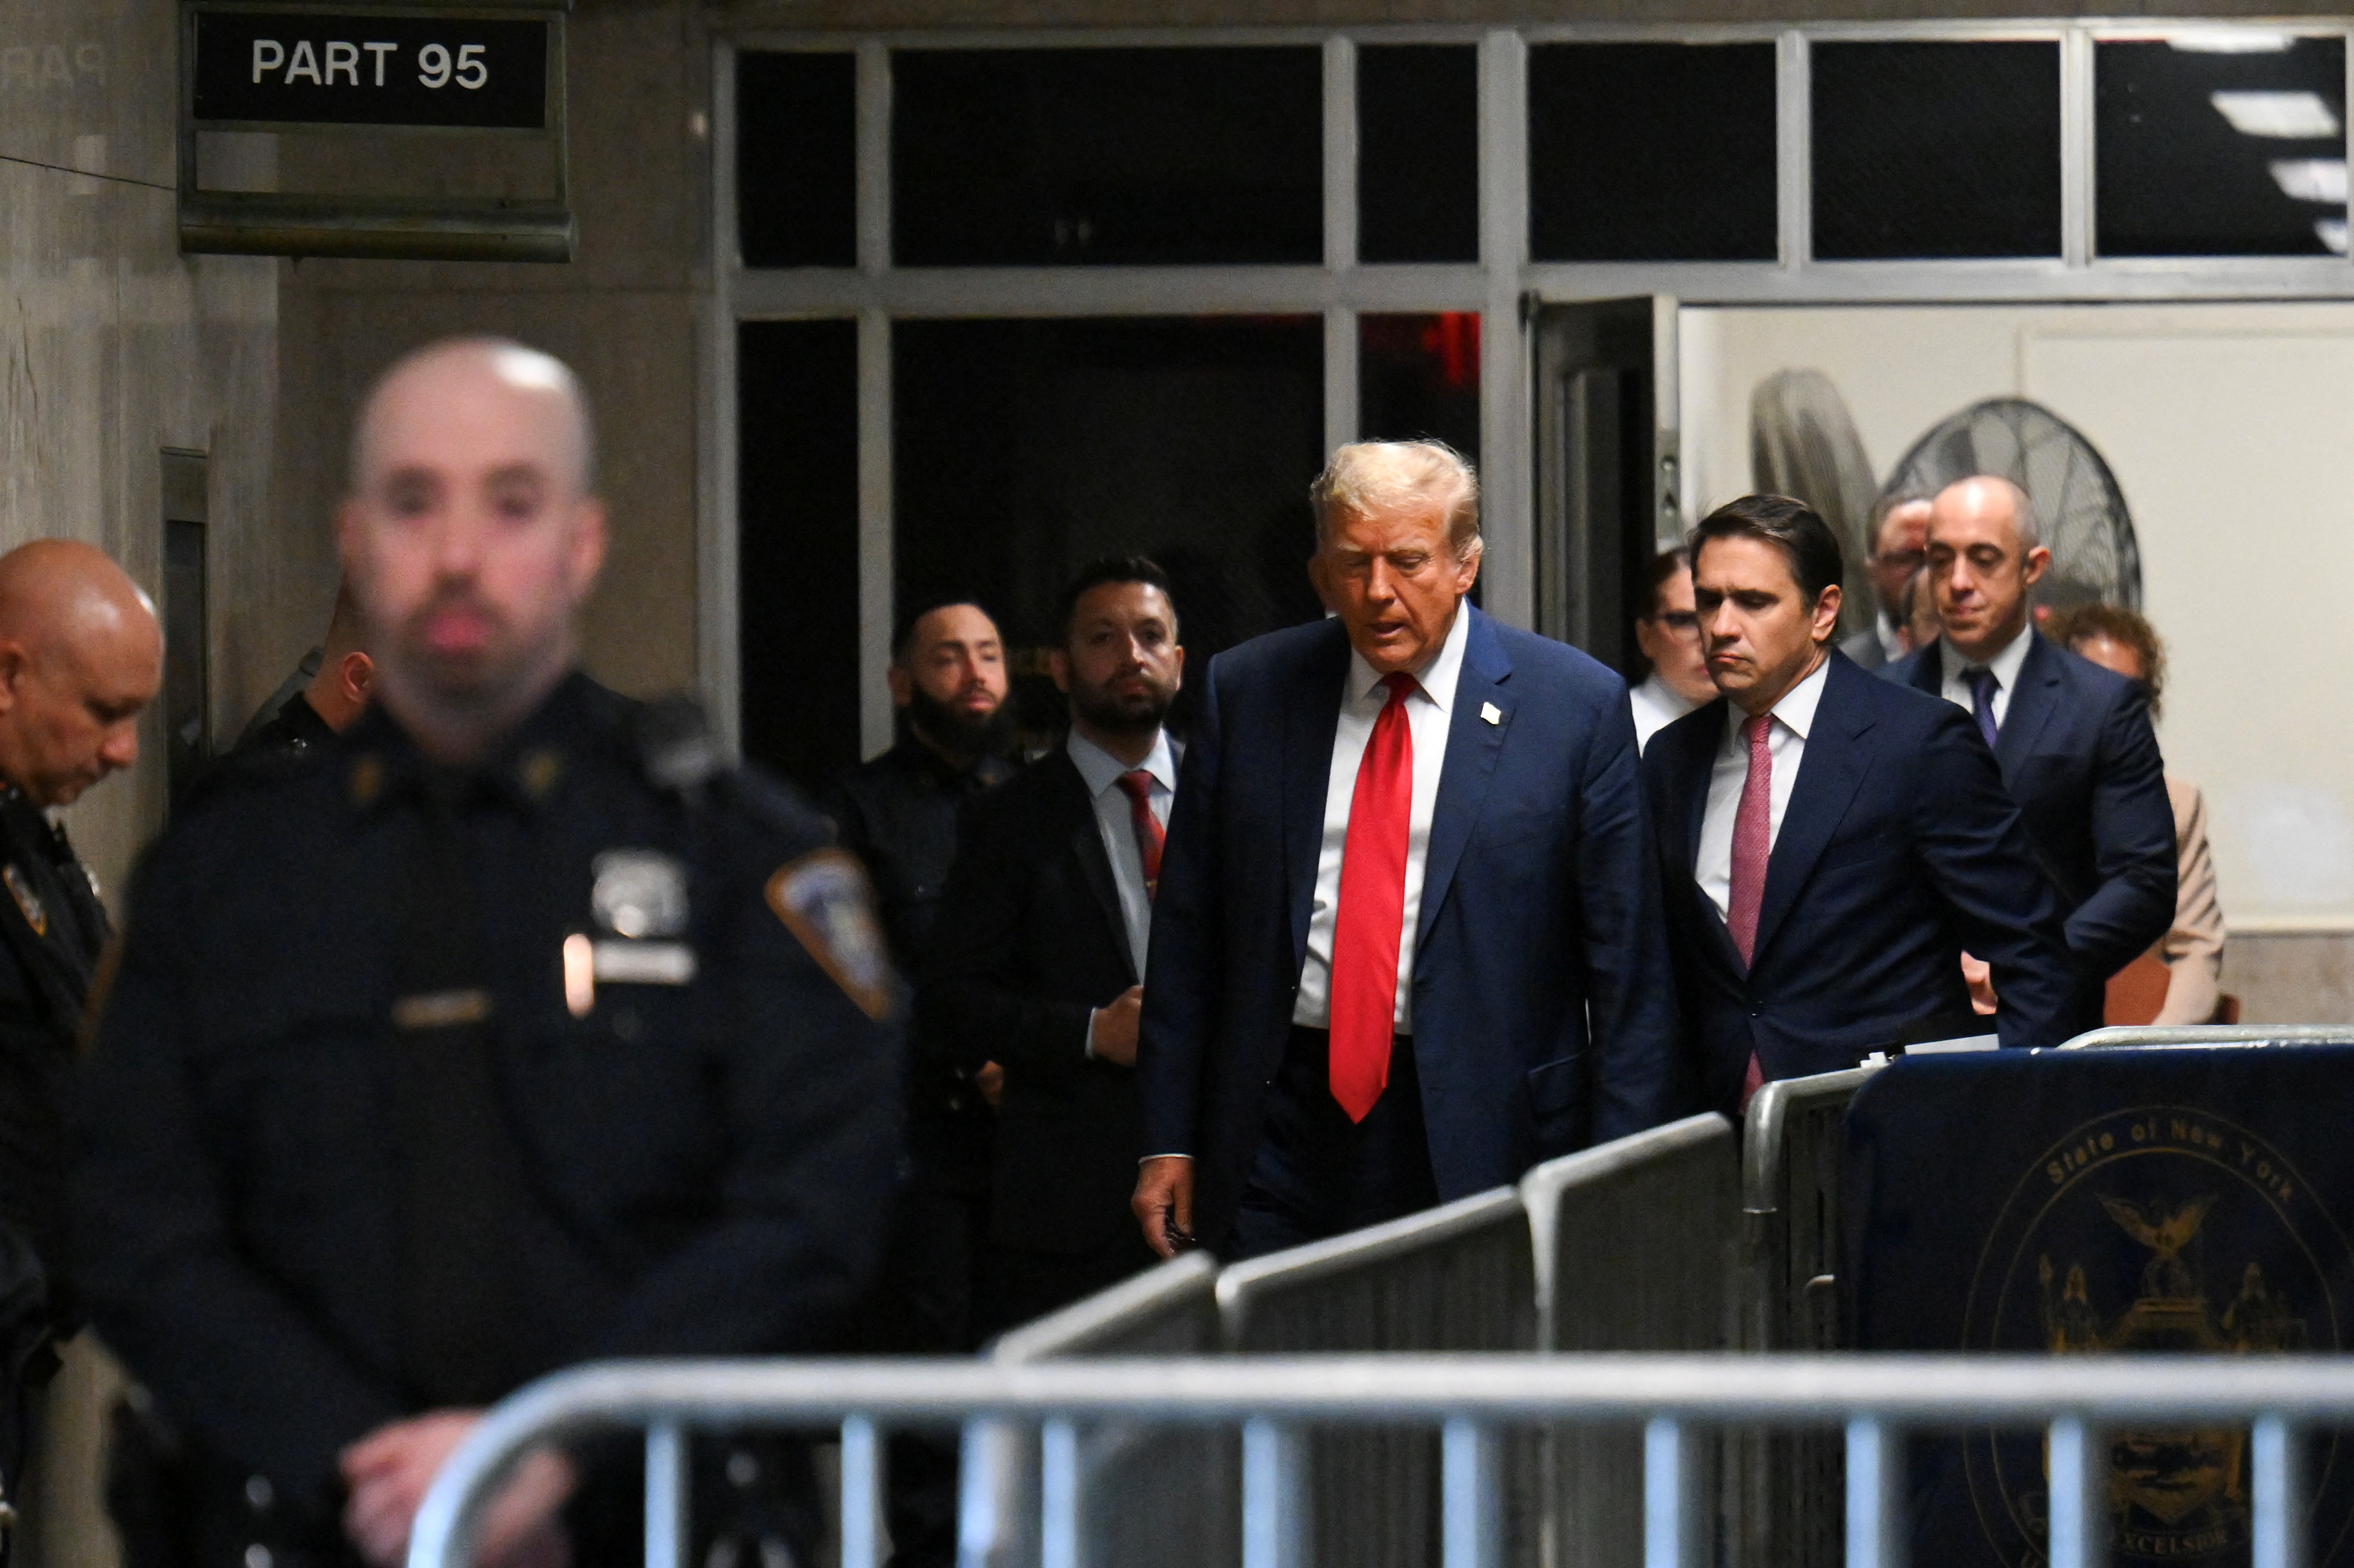 Trump's criminal hush money trial kicks off in New York City